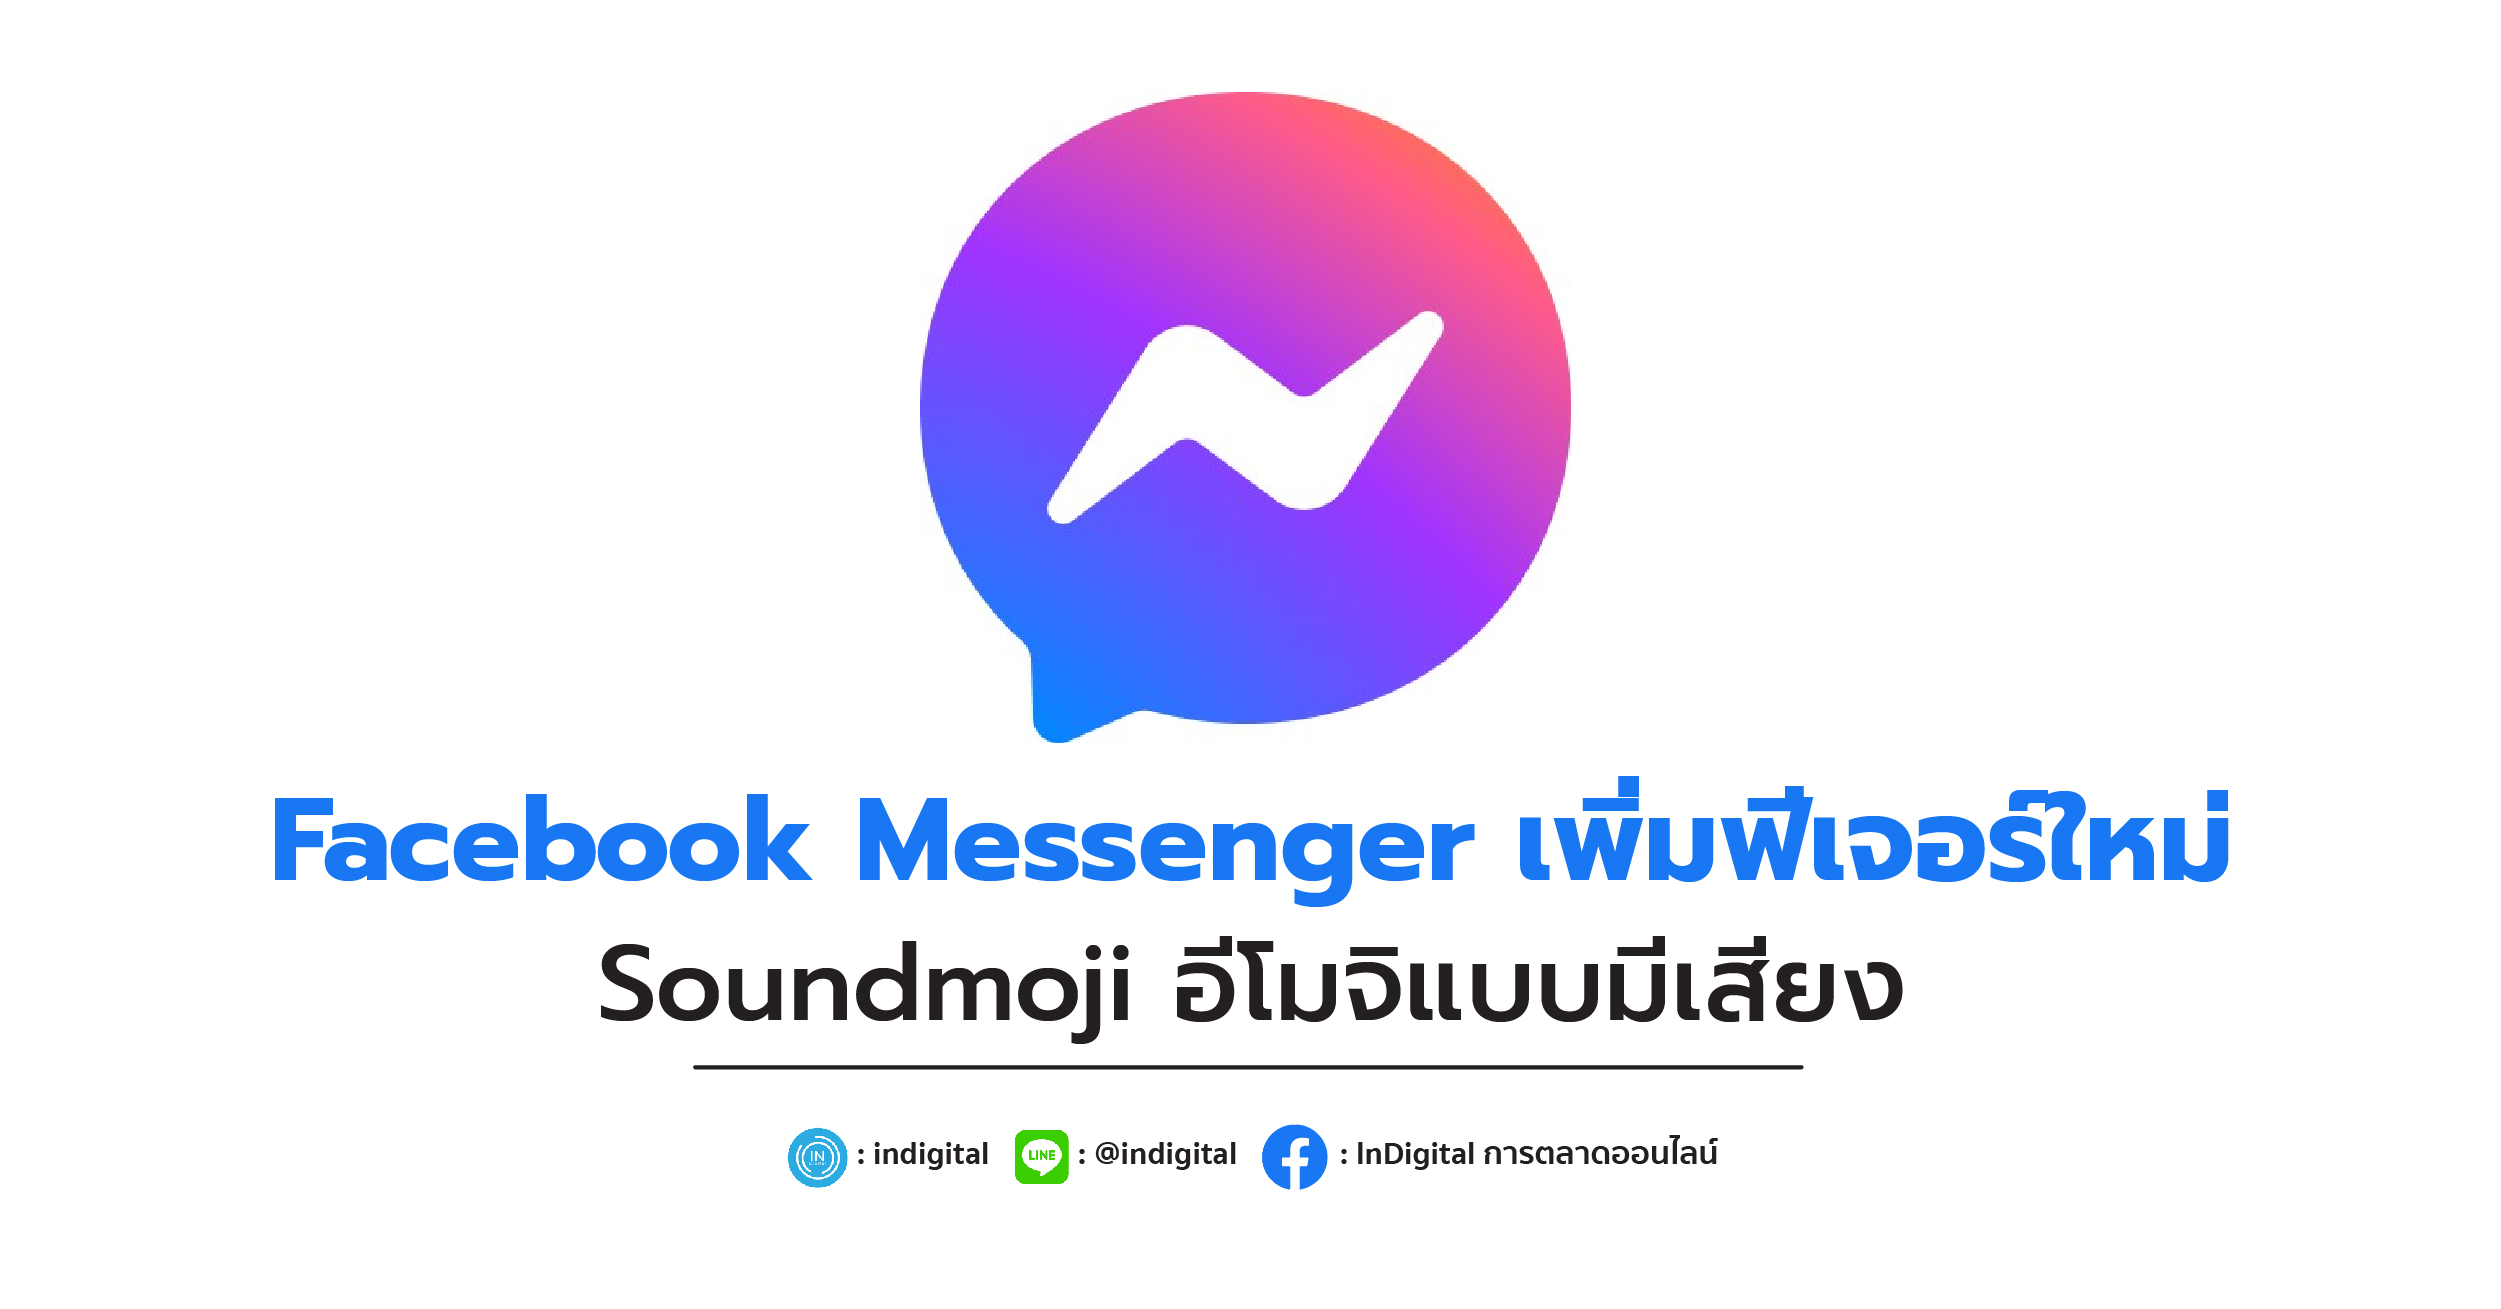 Facebook Messenger เพิ่มฟีเจอร์ใหม่ Soundmoji อีโมจิแบบมีเสียง